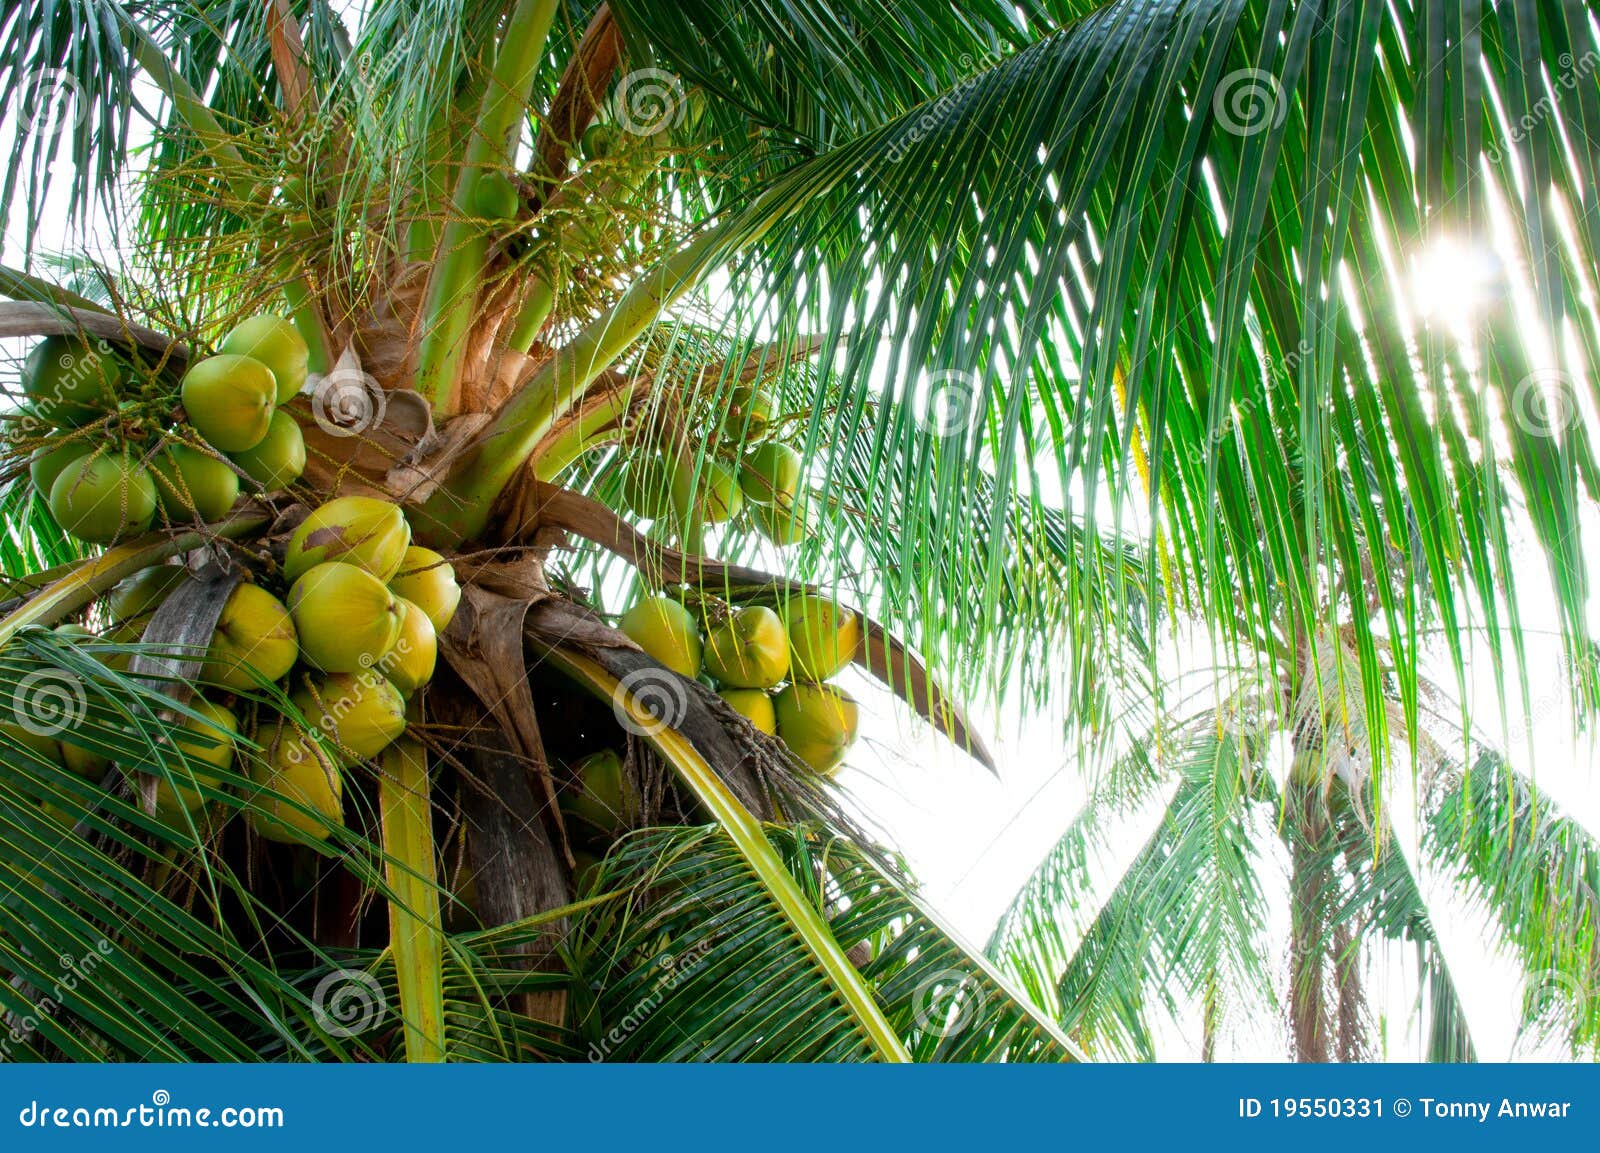 椰子树 免费图片 - Public Domain Pictures